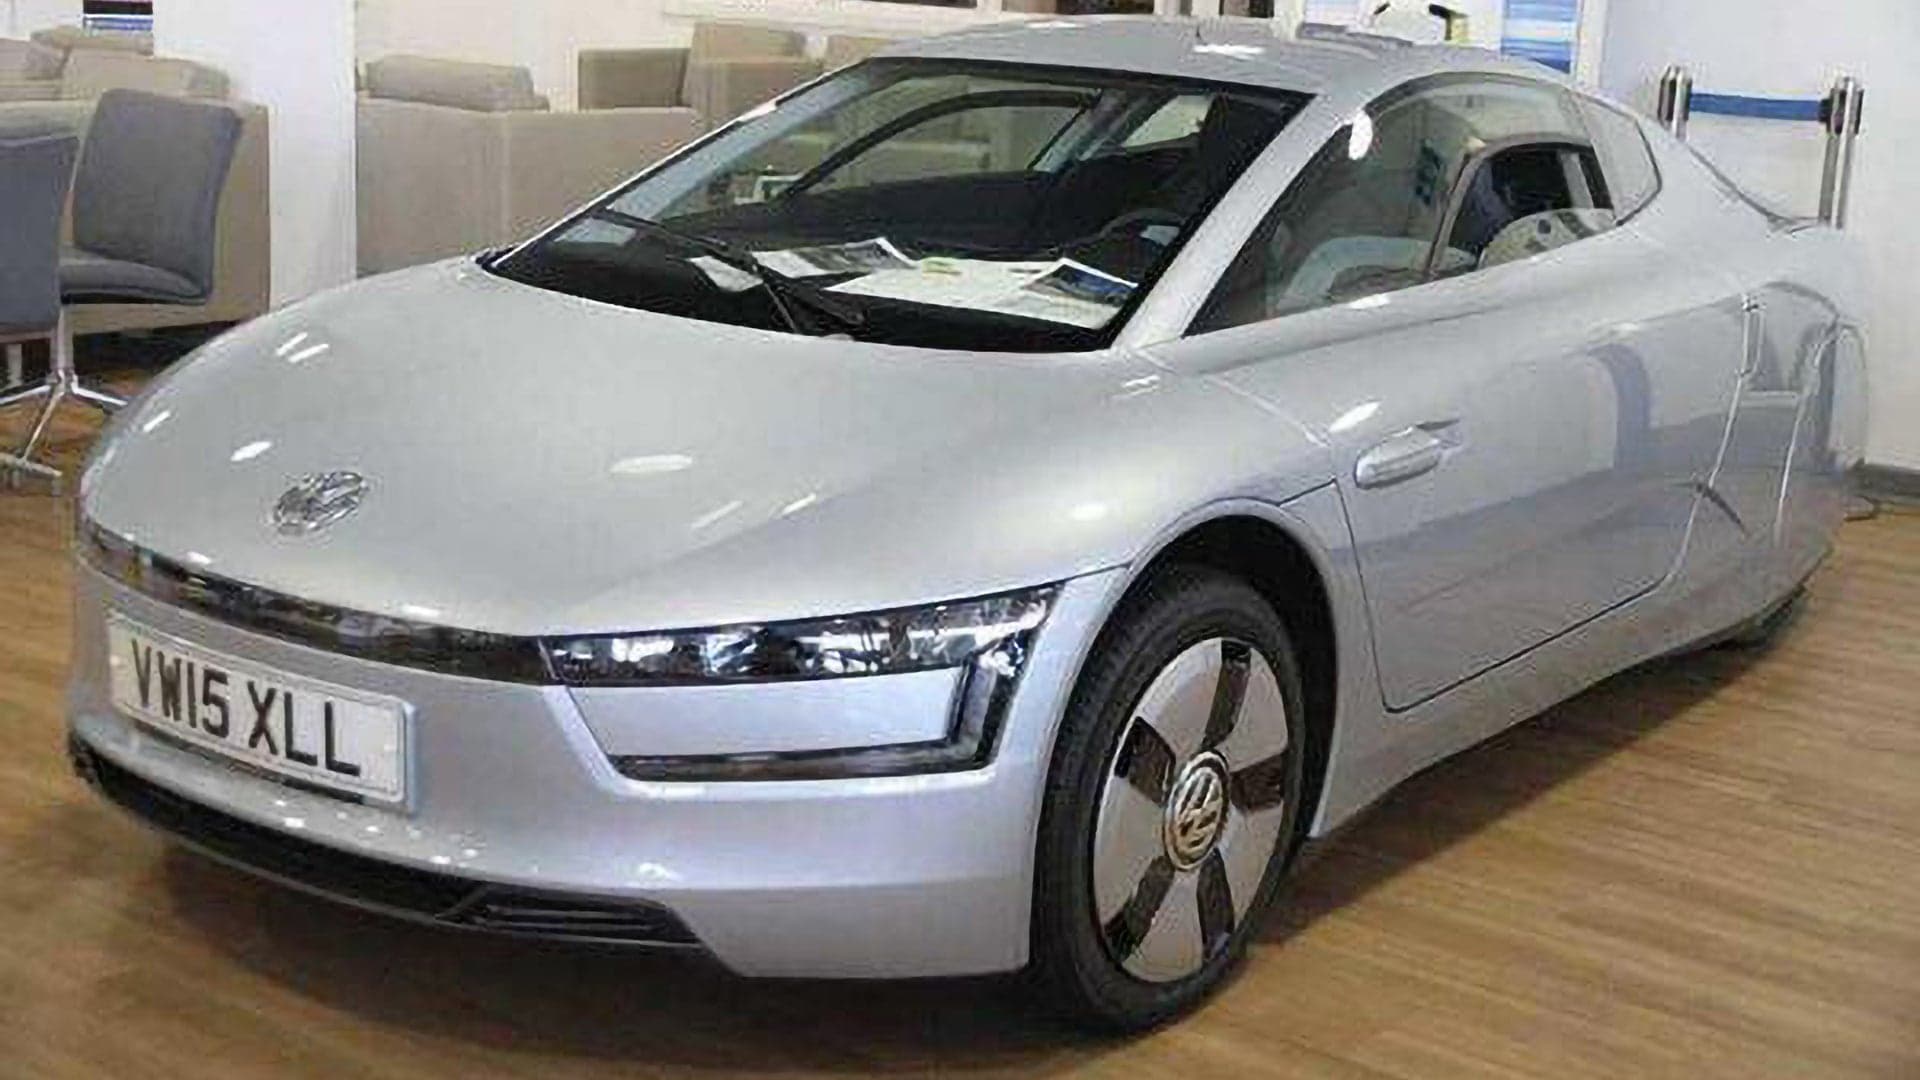 For Sale: Ultra-Rare 2015 Volkswagen XL1 Diesel-Hybrid Capable of 260 MPG